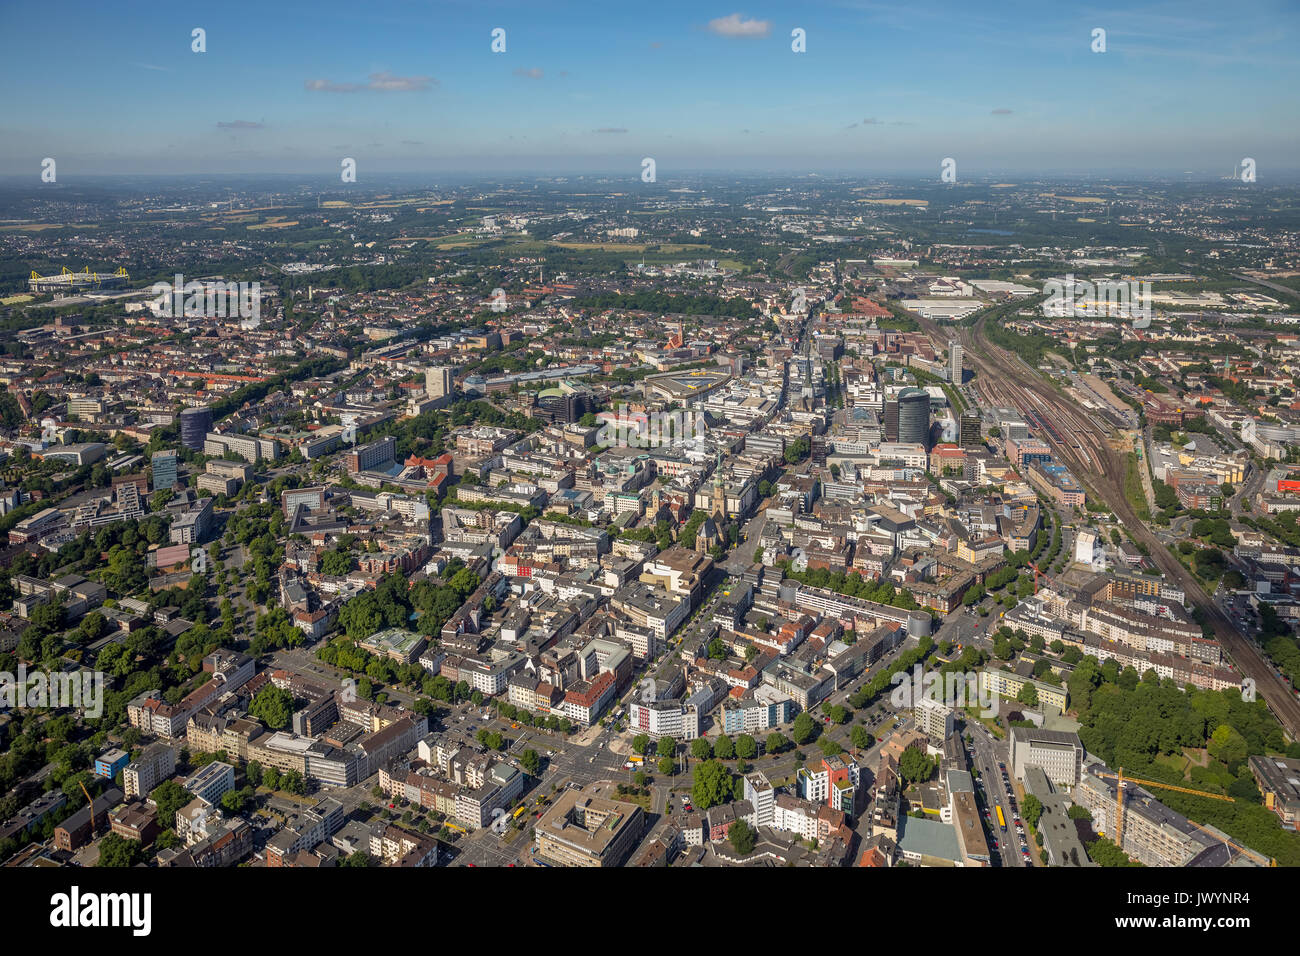 Overview Dortmund main station Dortmund, ramparts, Dortmund, Ruhr area, North Rhine-Westphalia, Germany, Dortmund, Europe, Aerial View, Aerial, aerial Stock Photo